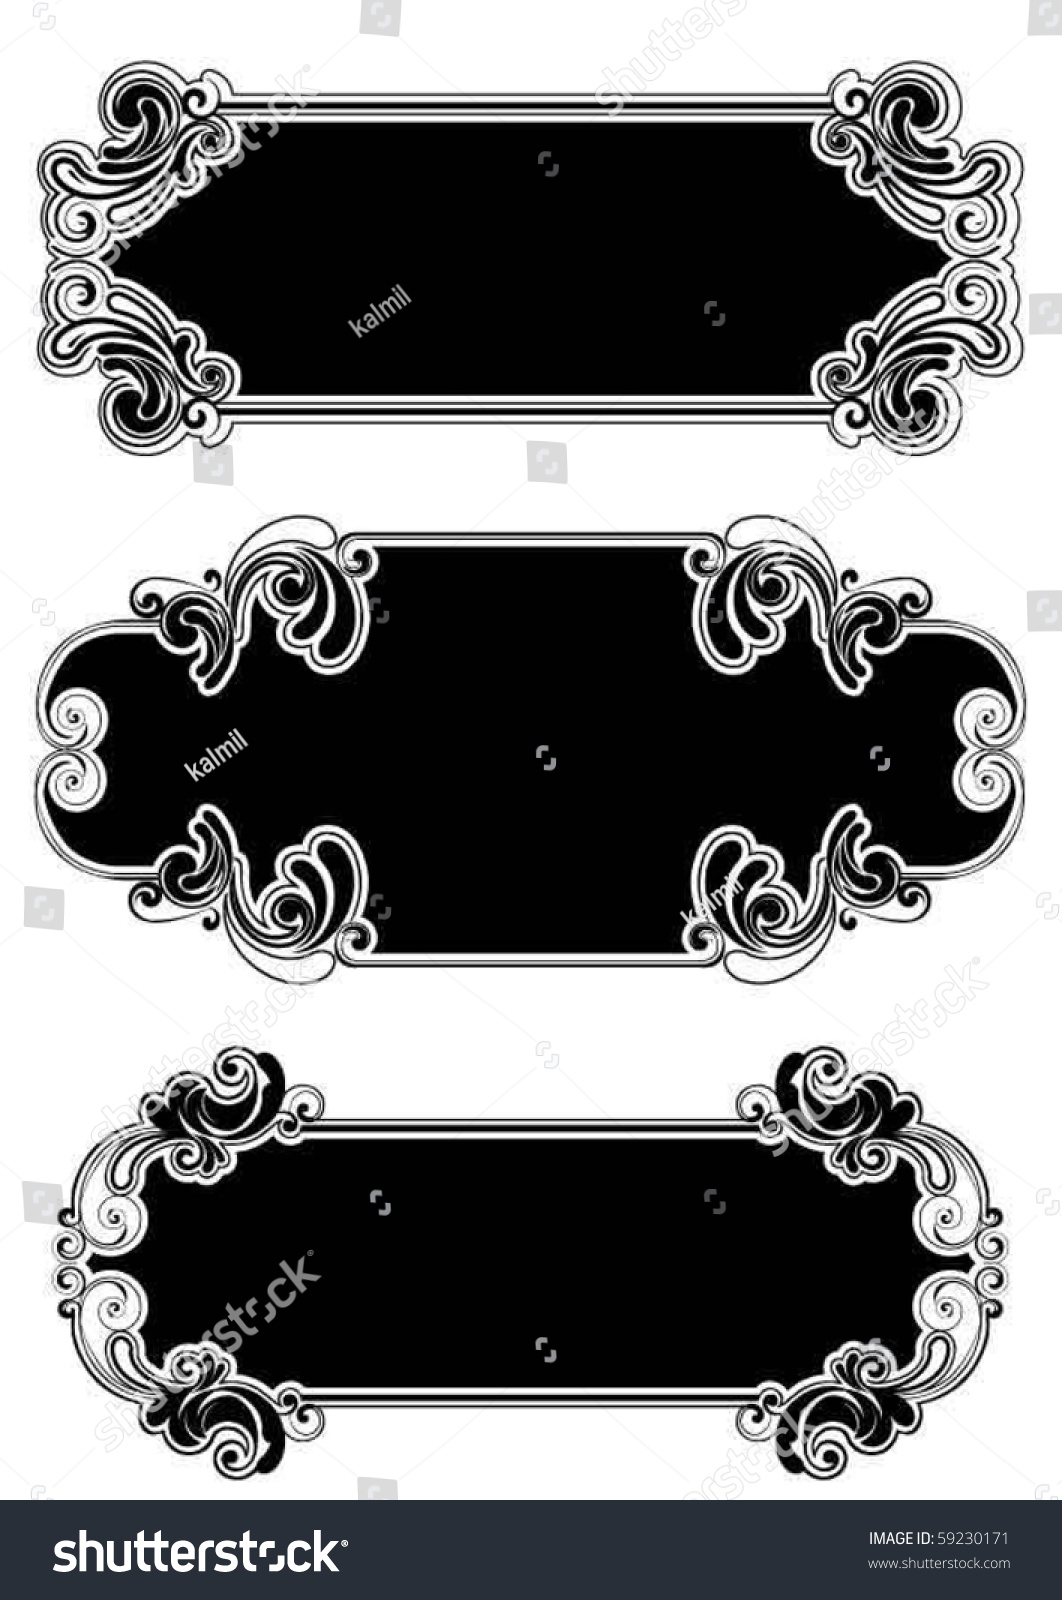 Black Frames Stock Vector Illustration 59230171 : Shutterstock